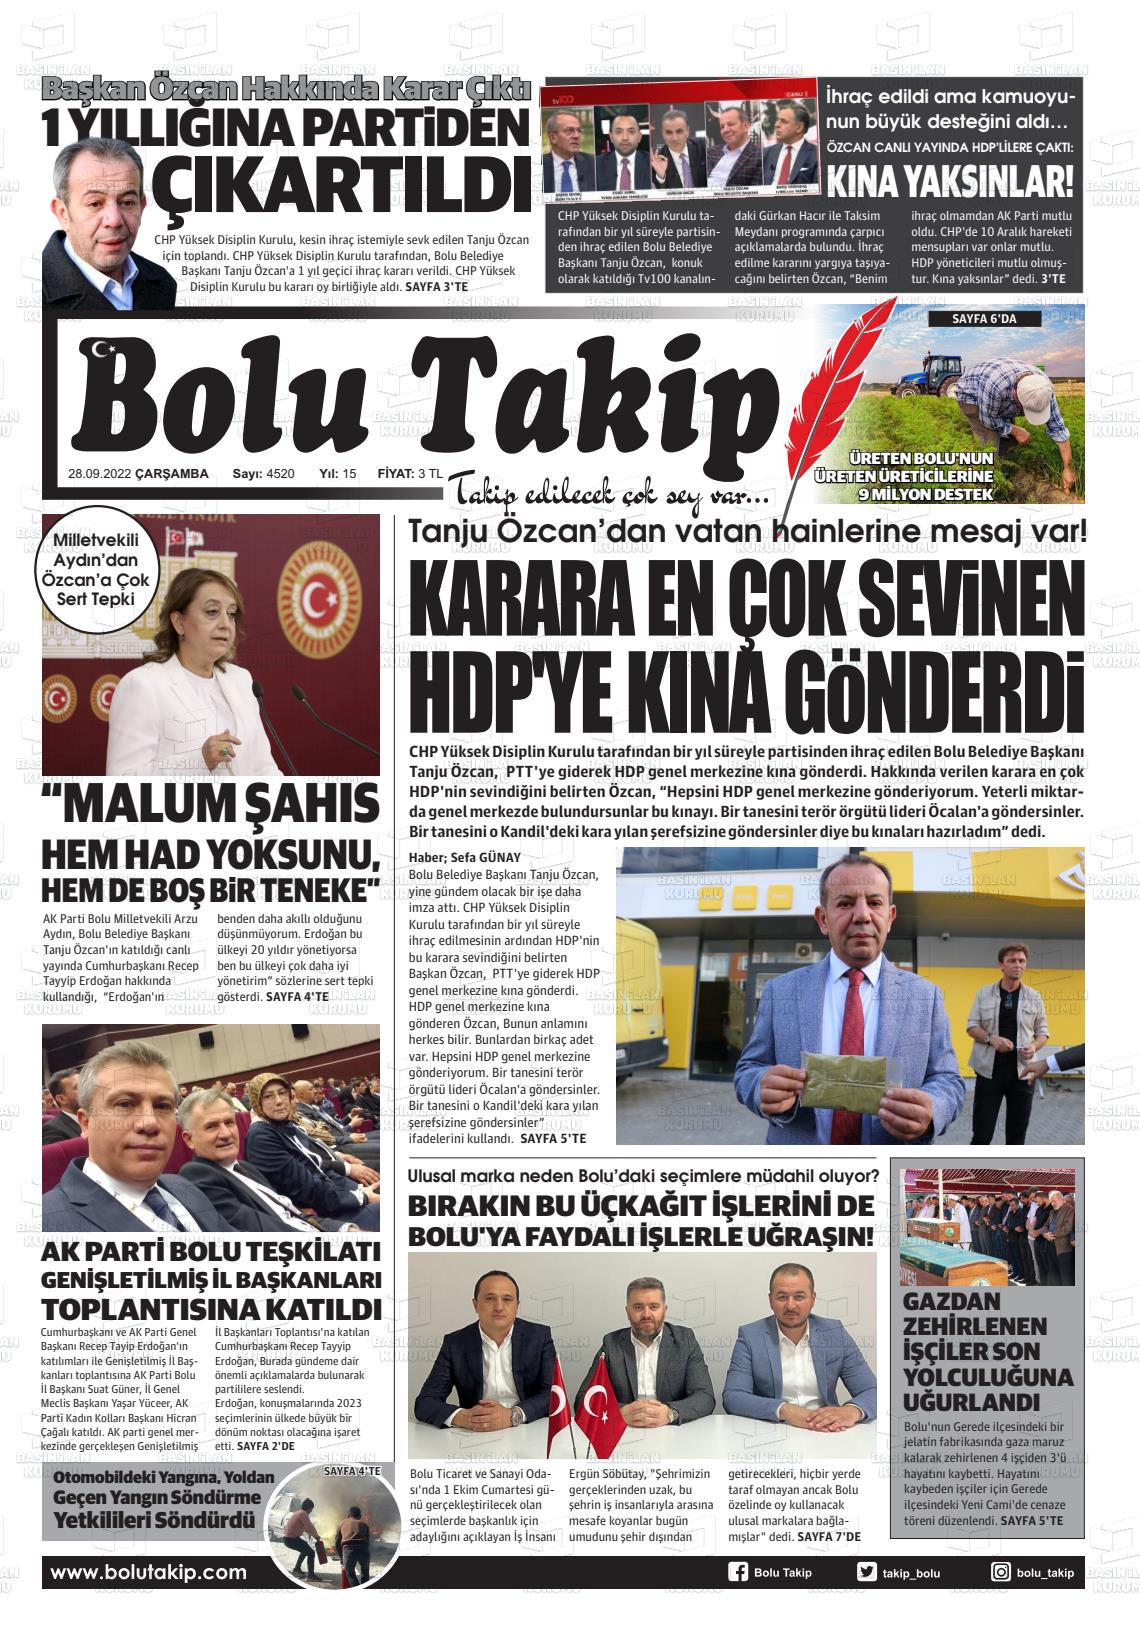 28 Eylül 2022 Bolu Takip Gazete Manşeti